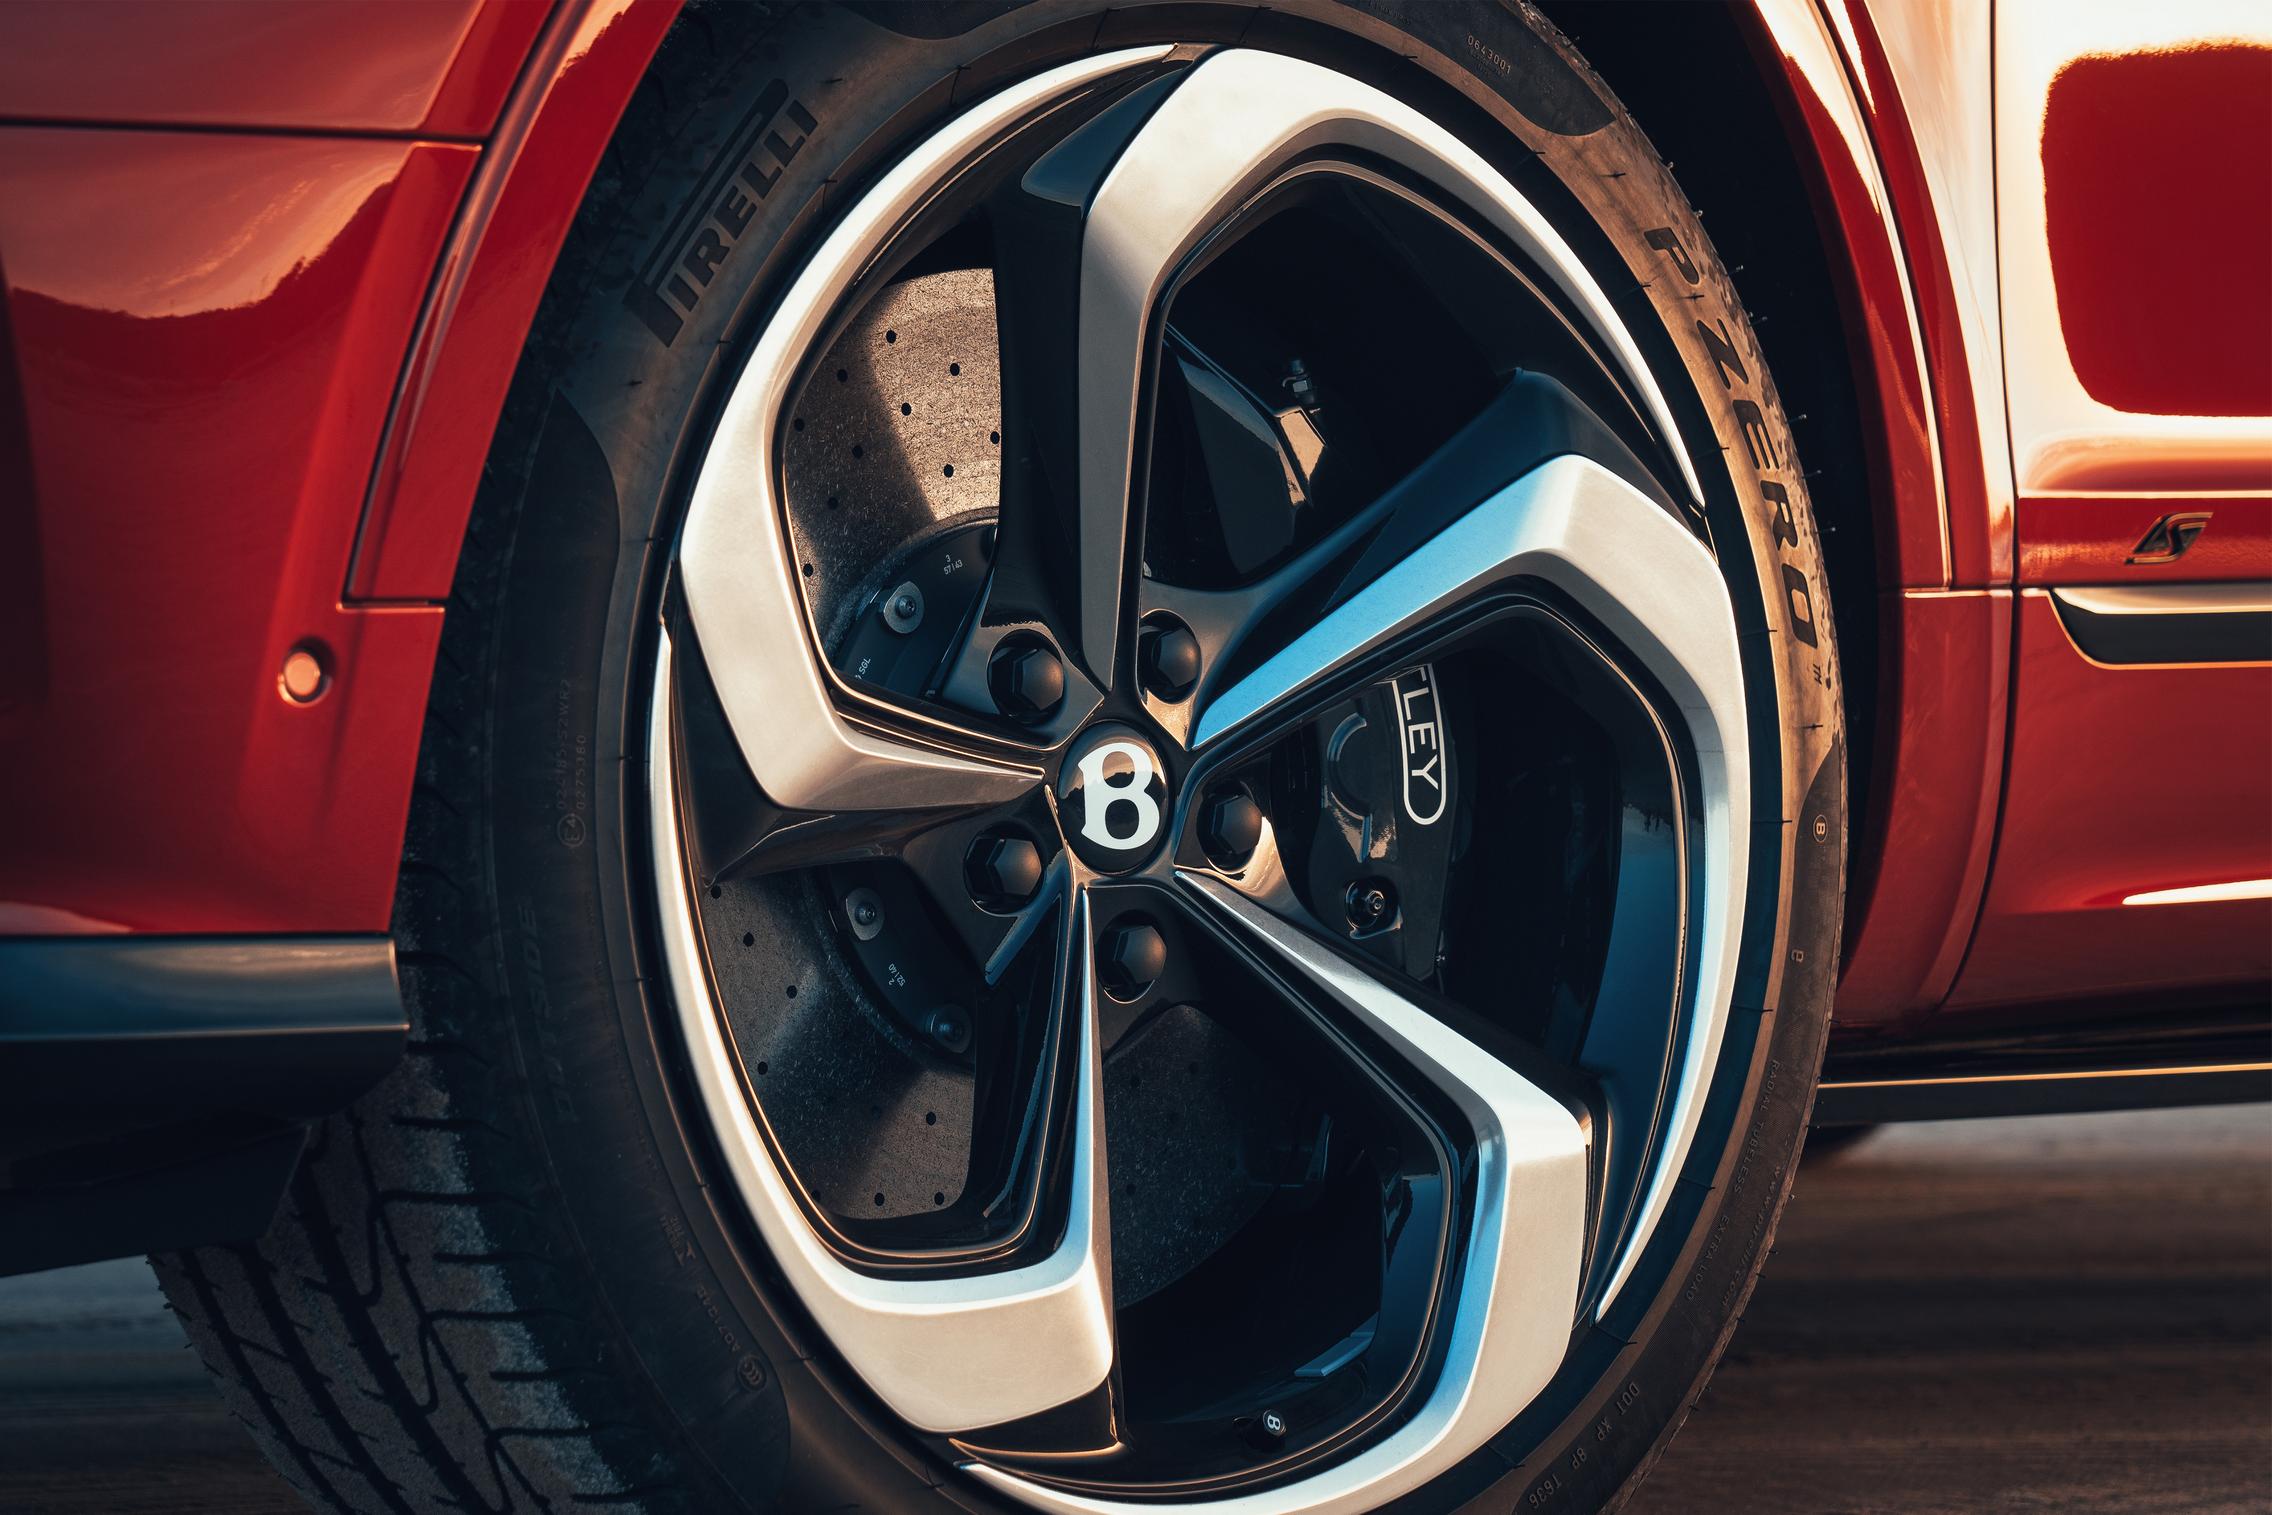 2021 Bentley Bentayga S wheels